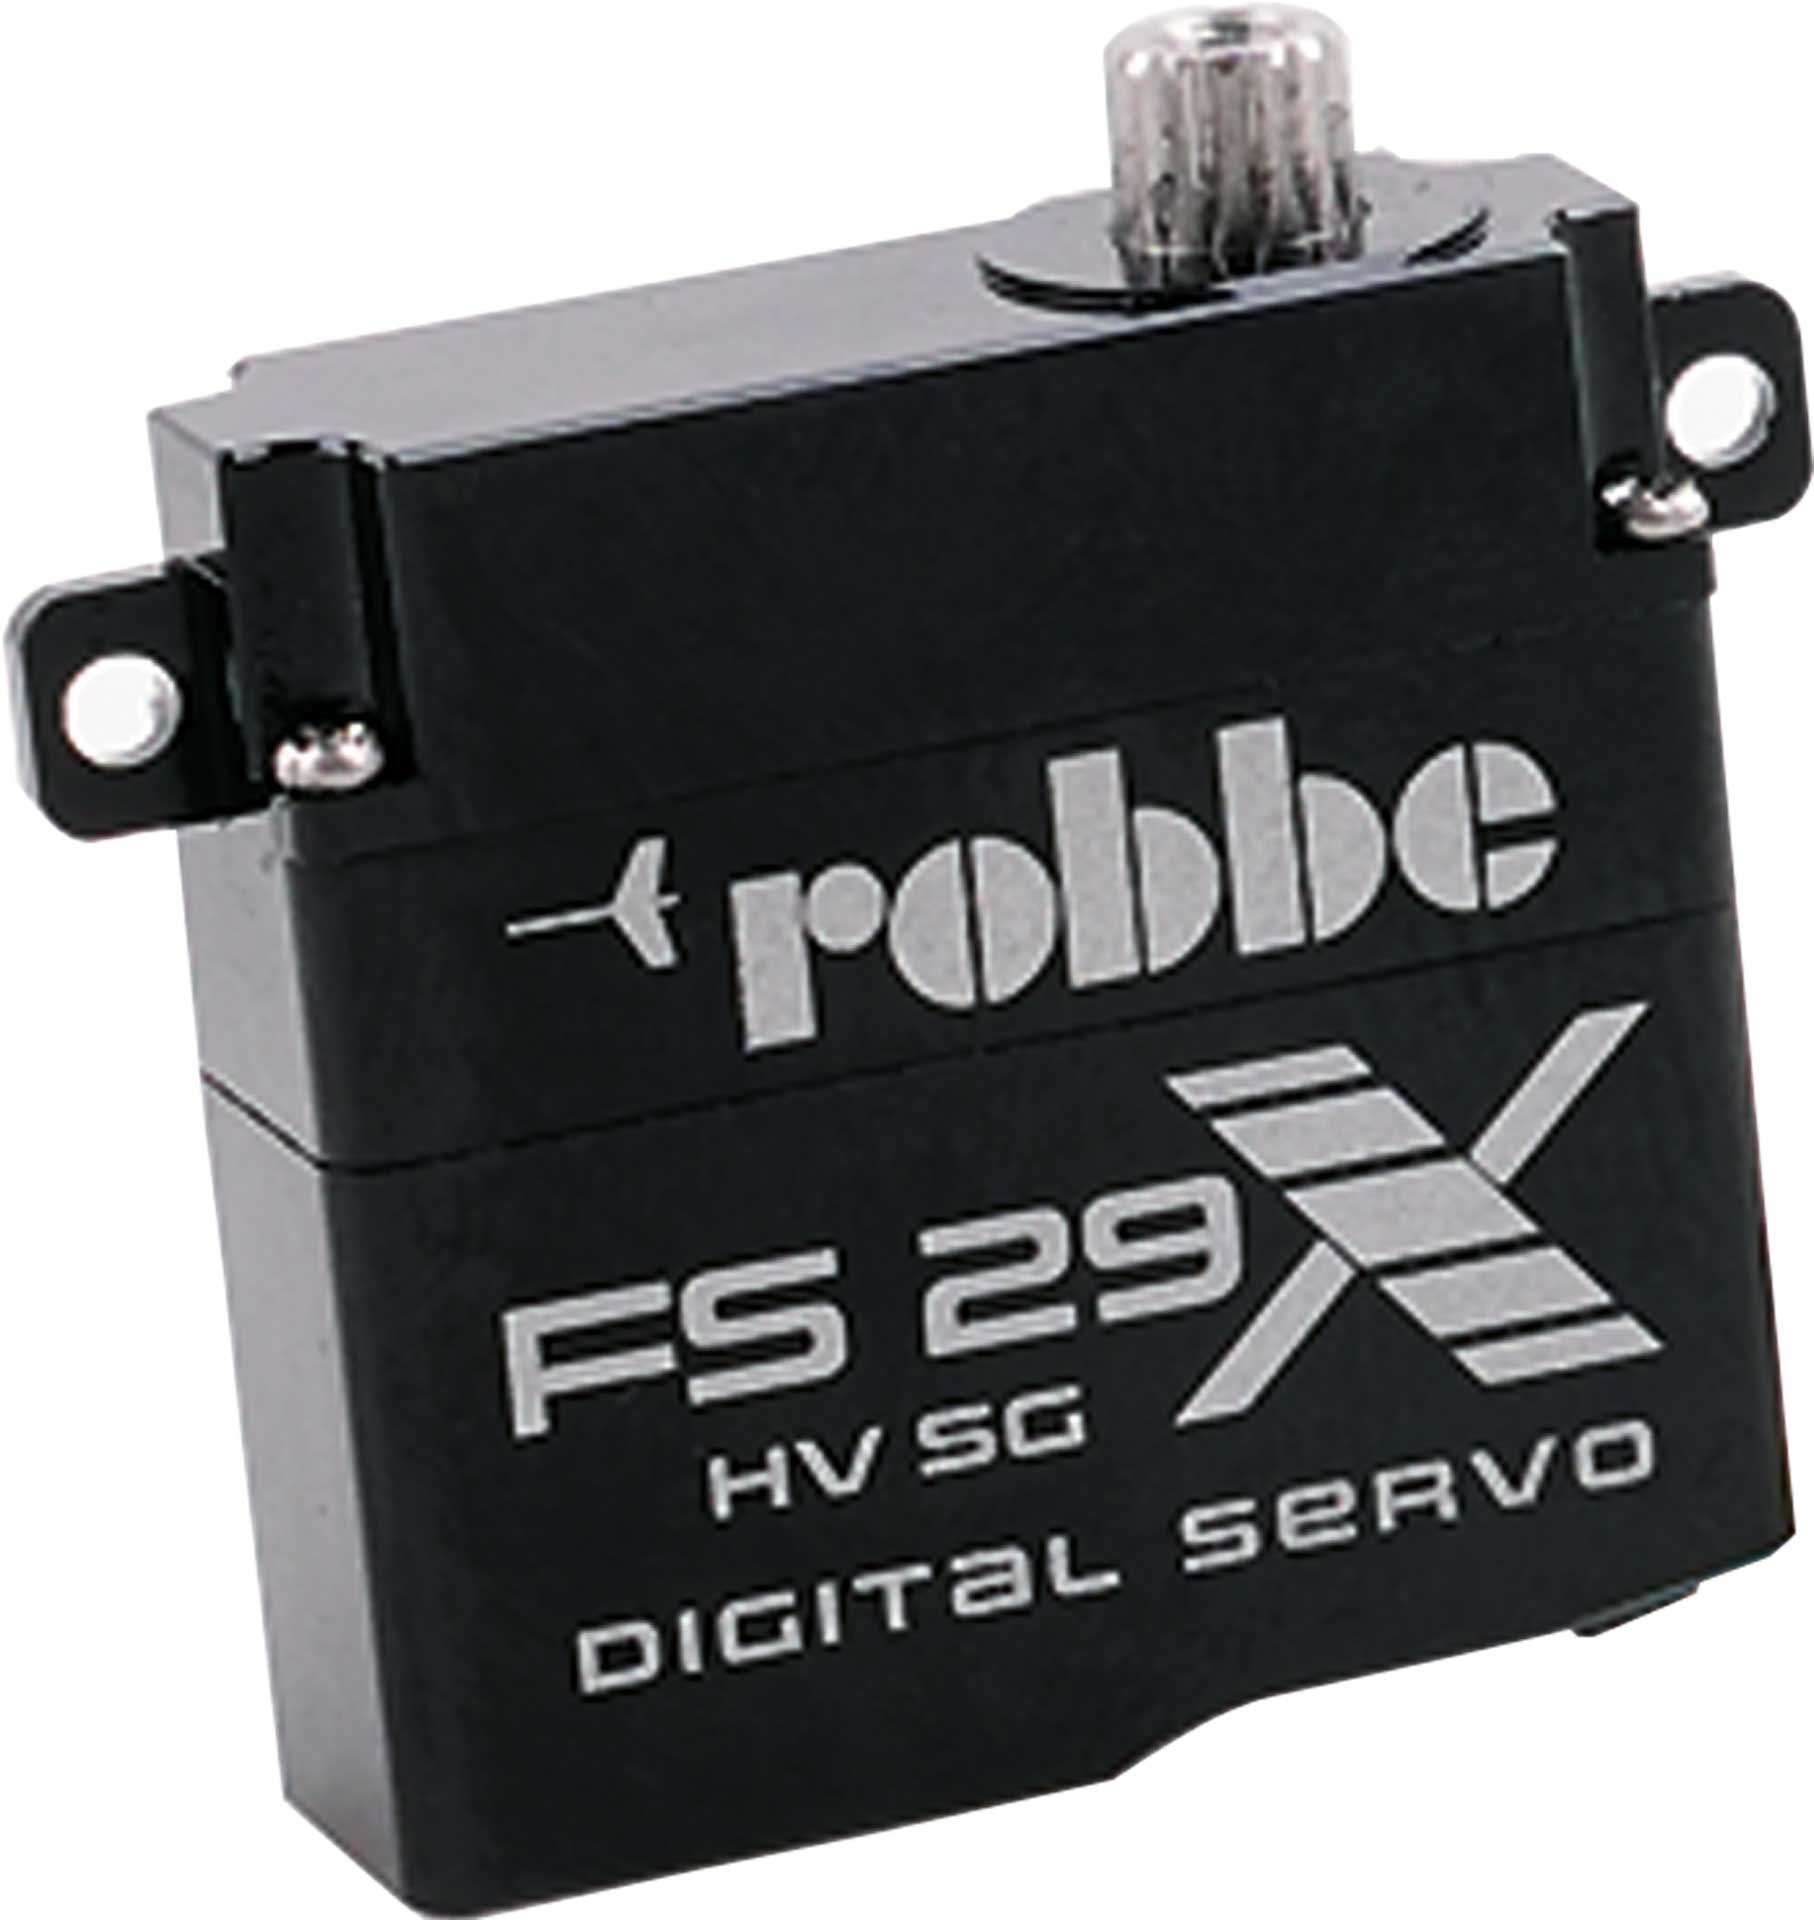 Robbe Modellsport FS-29 X HV SG digital servo dimension compatible to KST X-08 with s